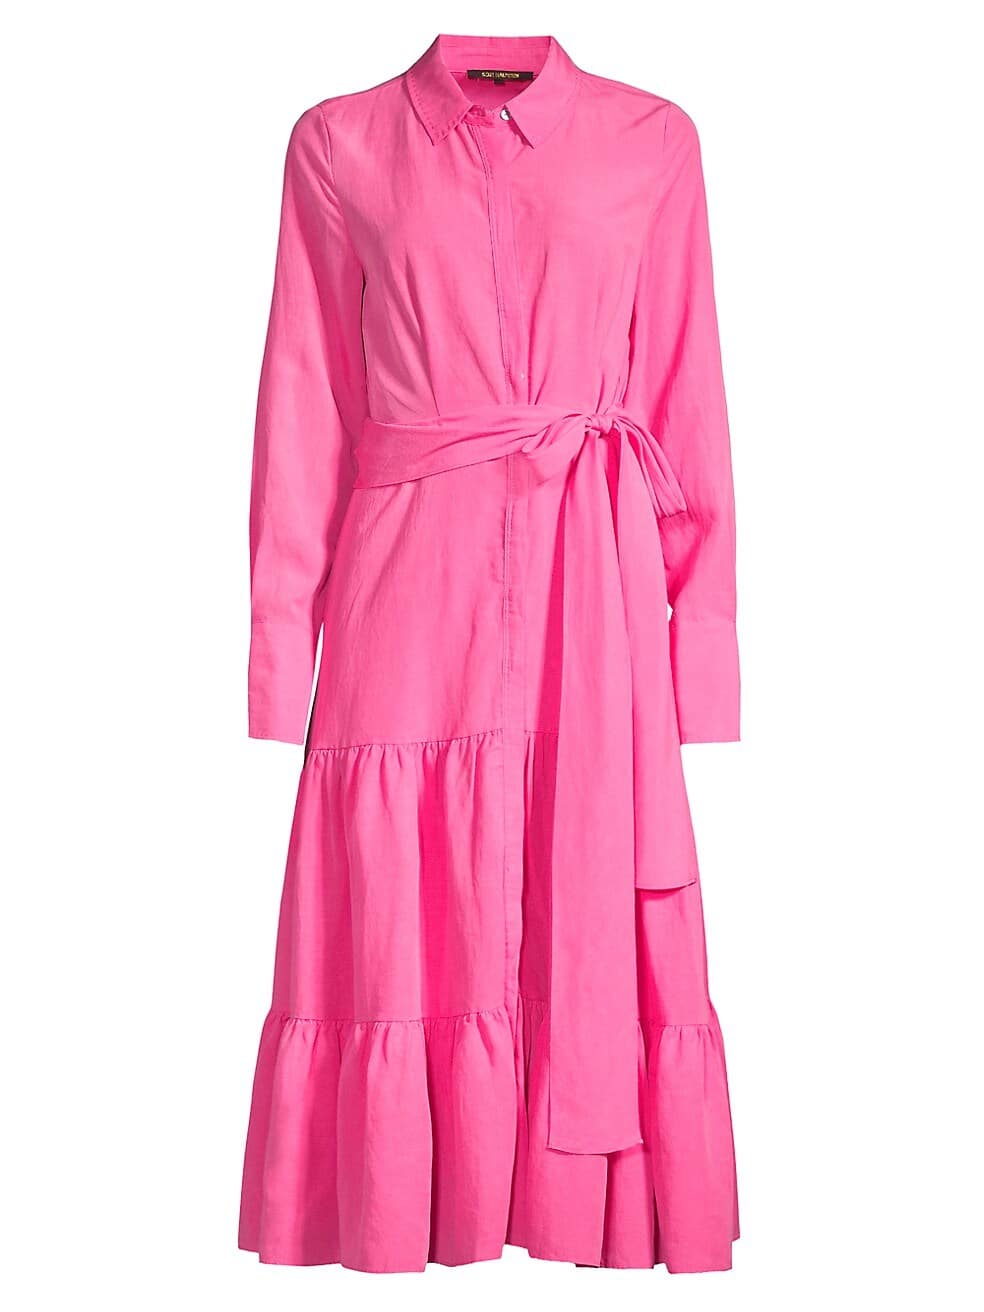 Saks Fifth Ave 25% Off Friends and Family sale - Spring dresses - pink dress - Kobi Halperin